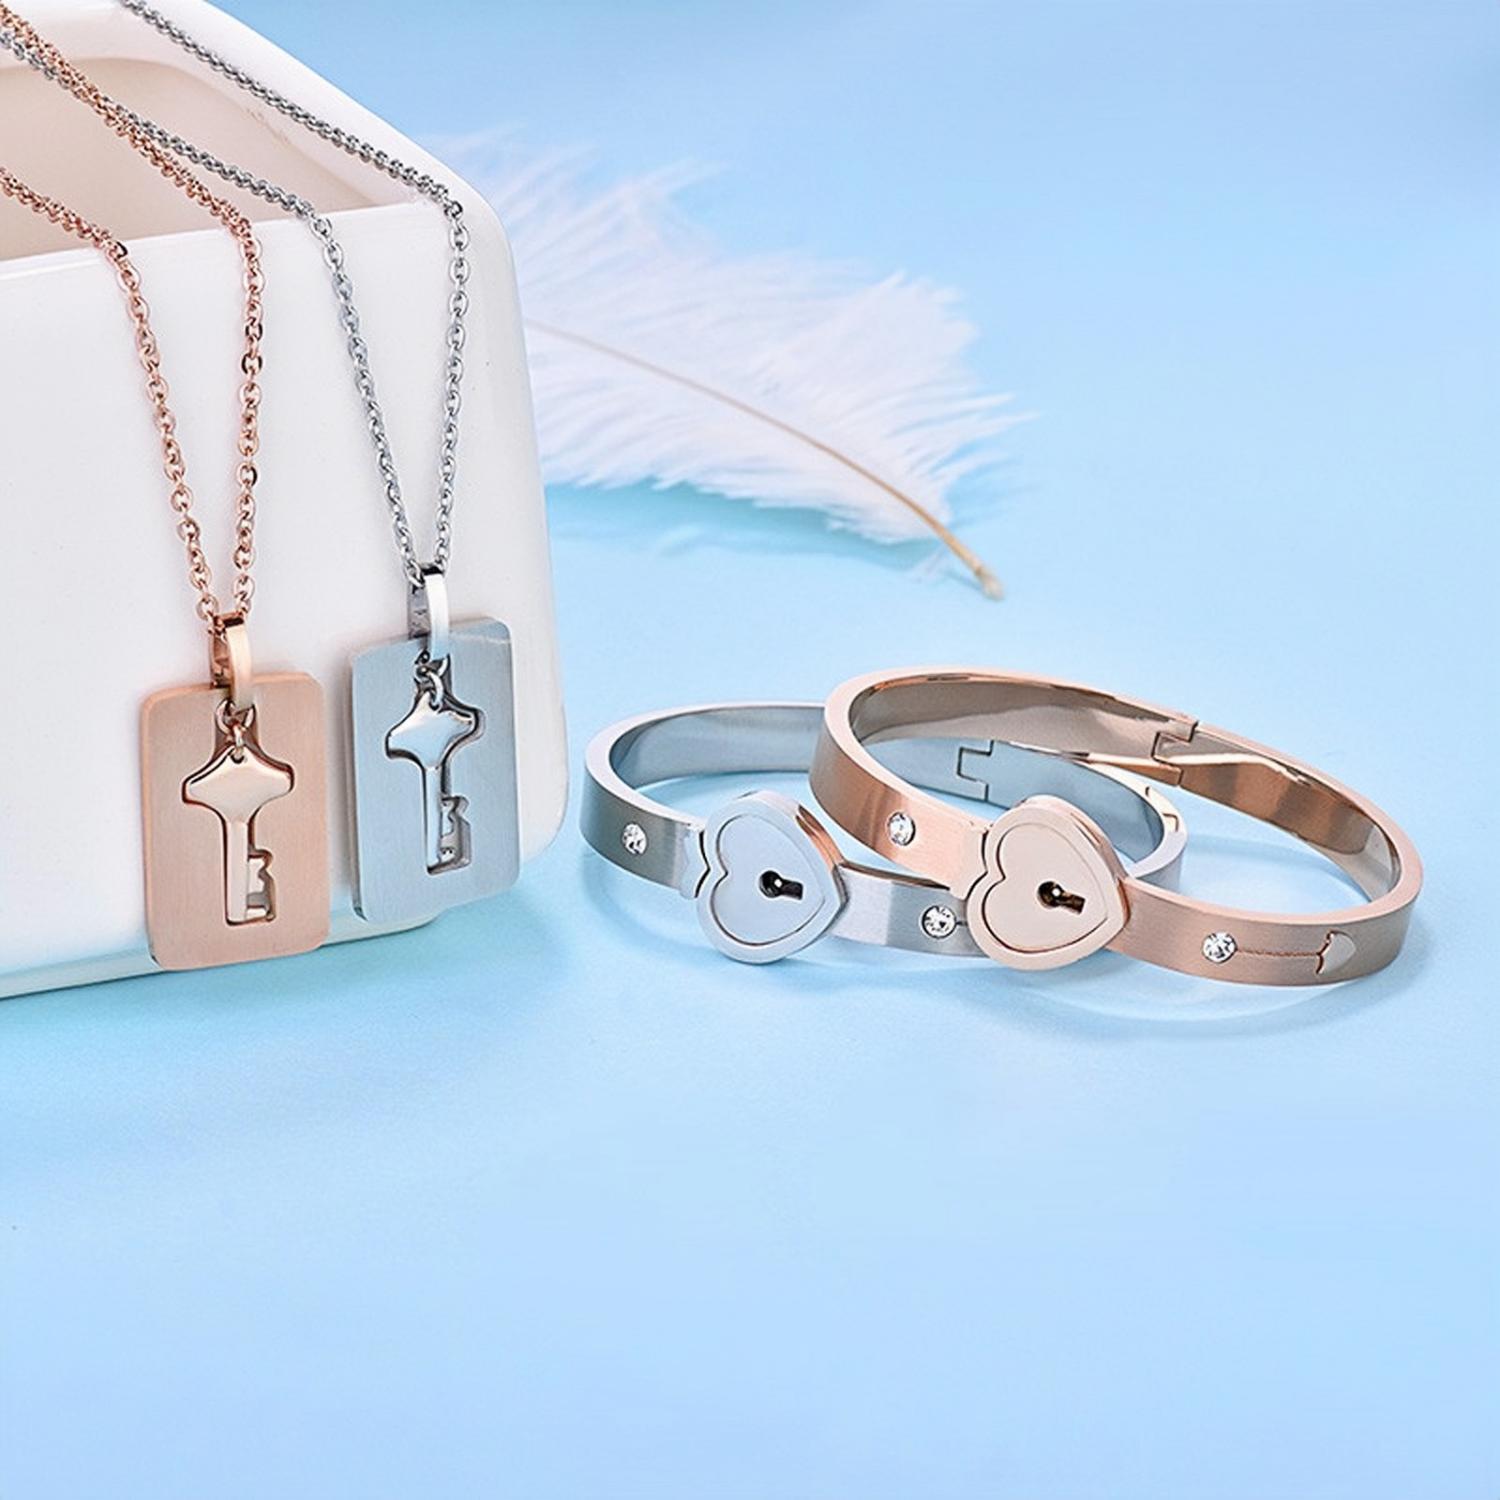 Unique Lock And Key Bracelet Necklace Set For Couples In Titanium - CoupleSets